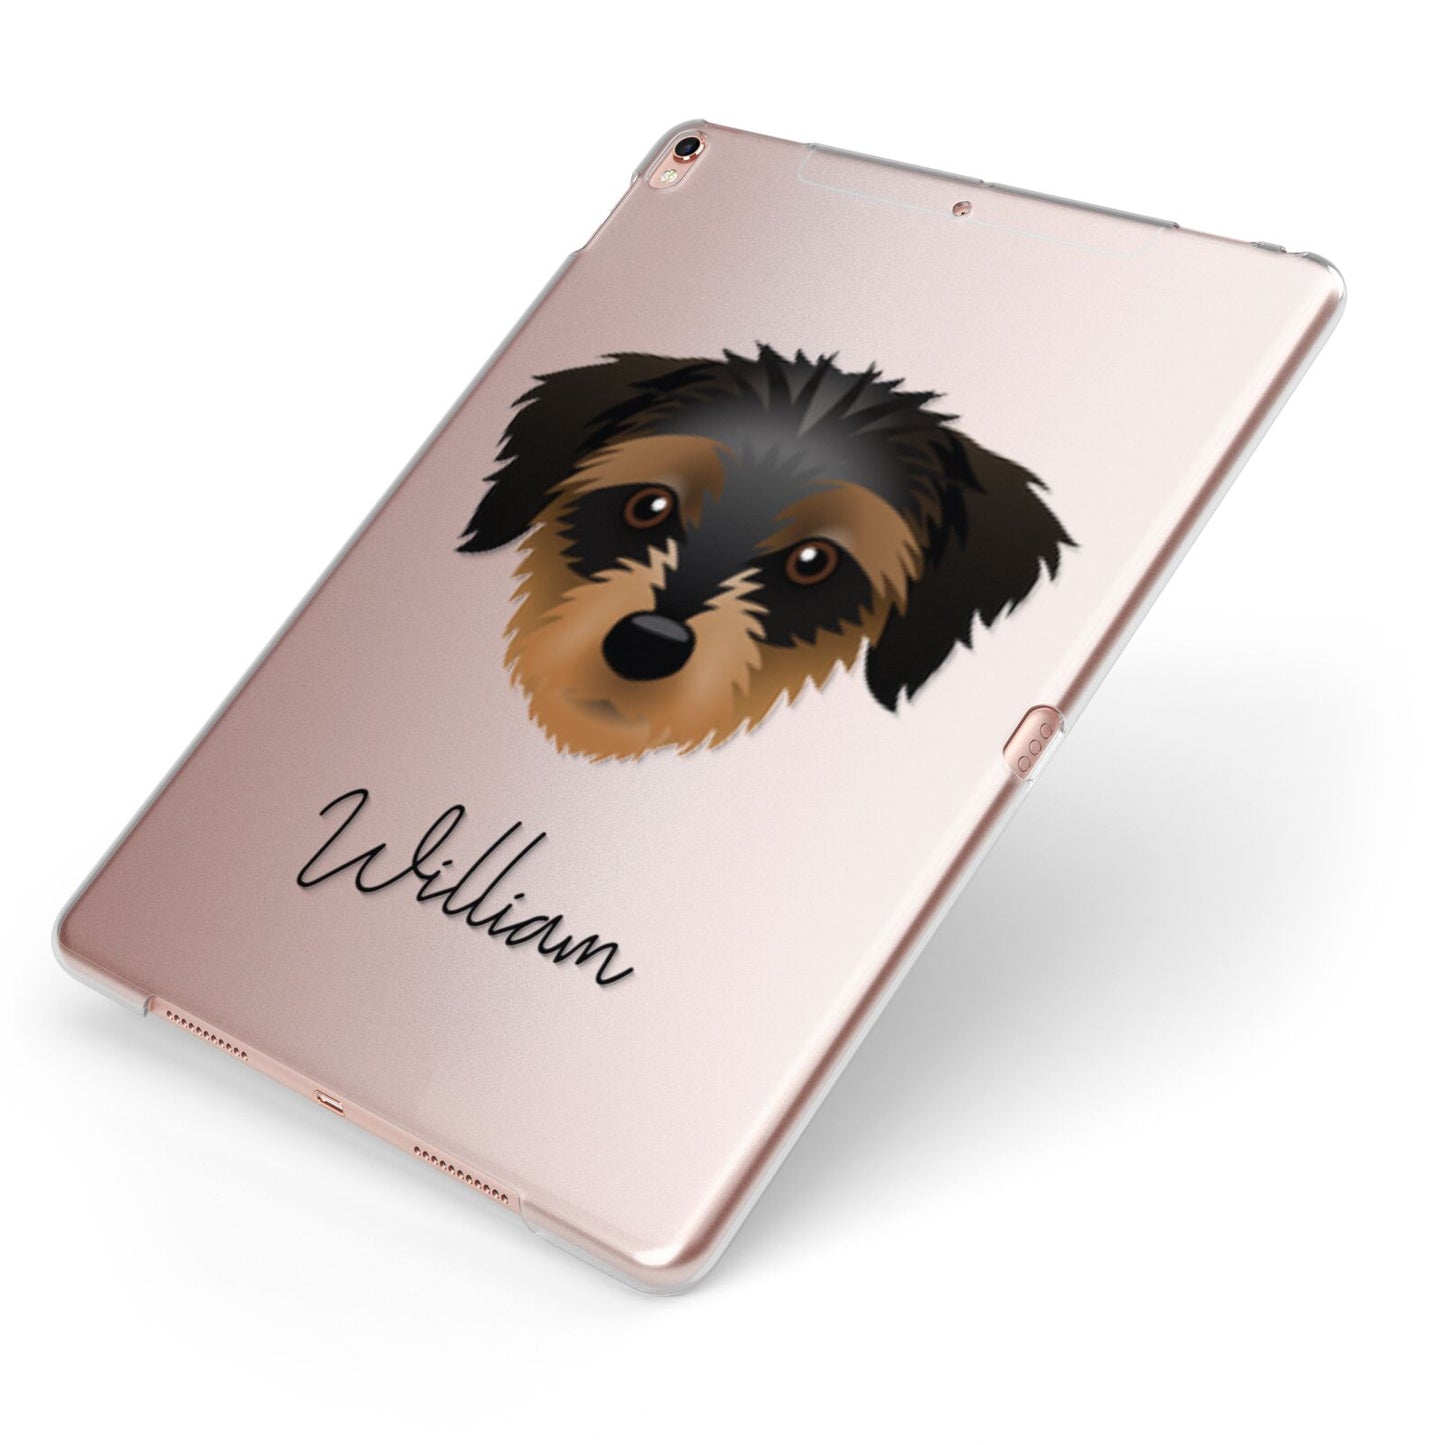 Dorkie Personalised Apple iPad Case on Rose Gold iPad Side View